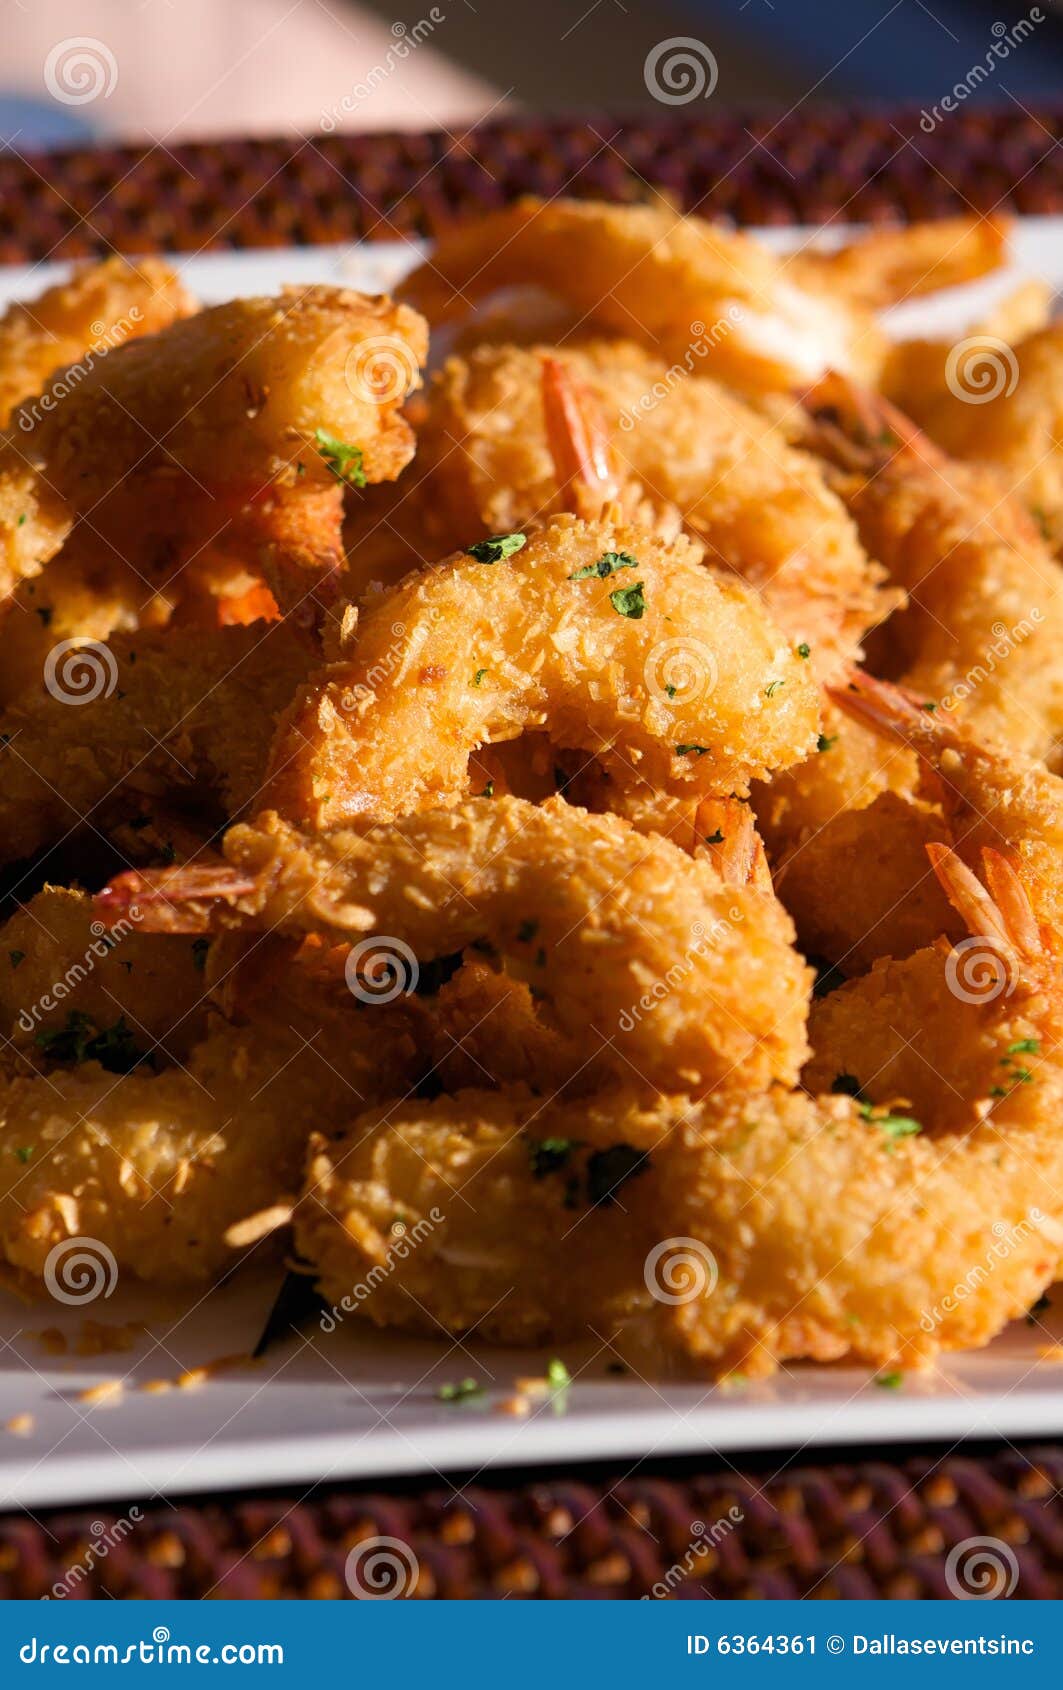 delicious fresh fried shrimp